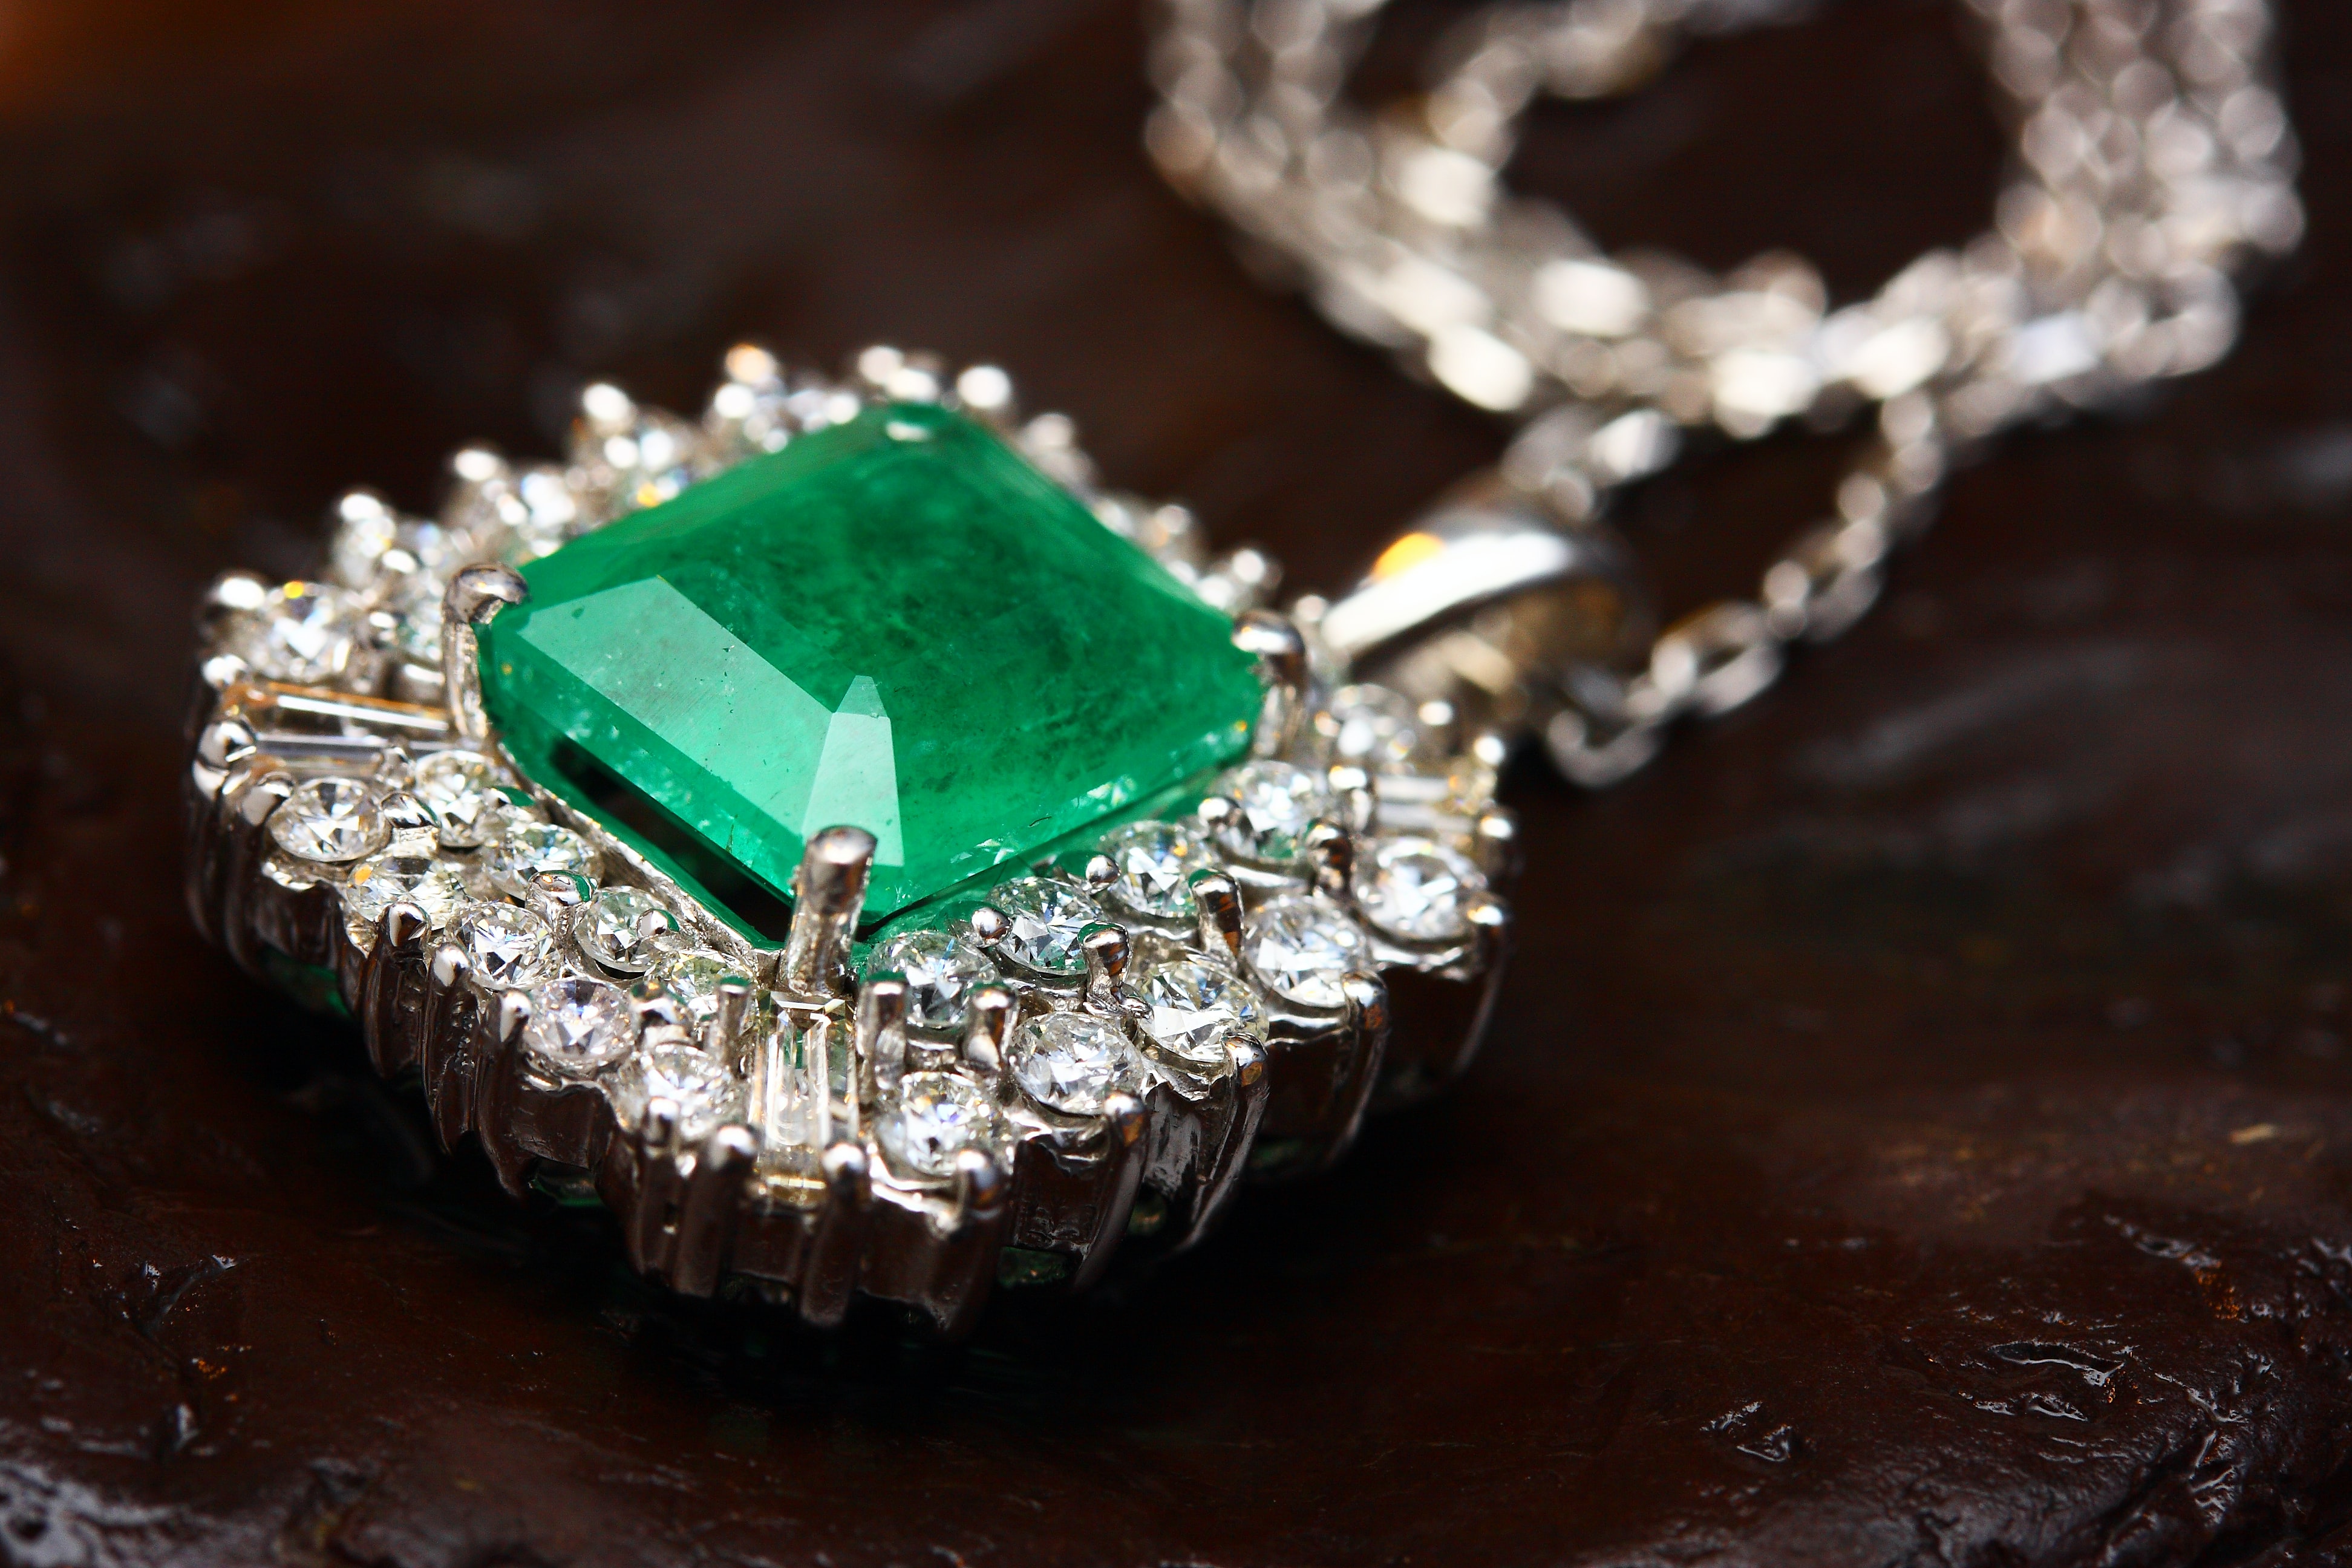 The Elegant Emerald Birthstone Necklace